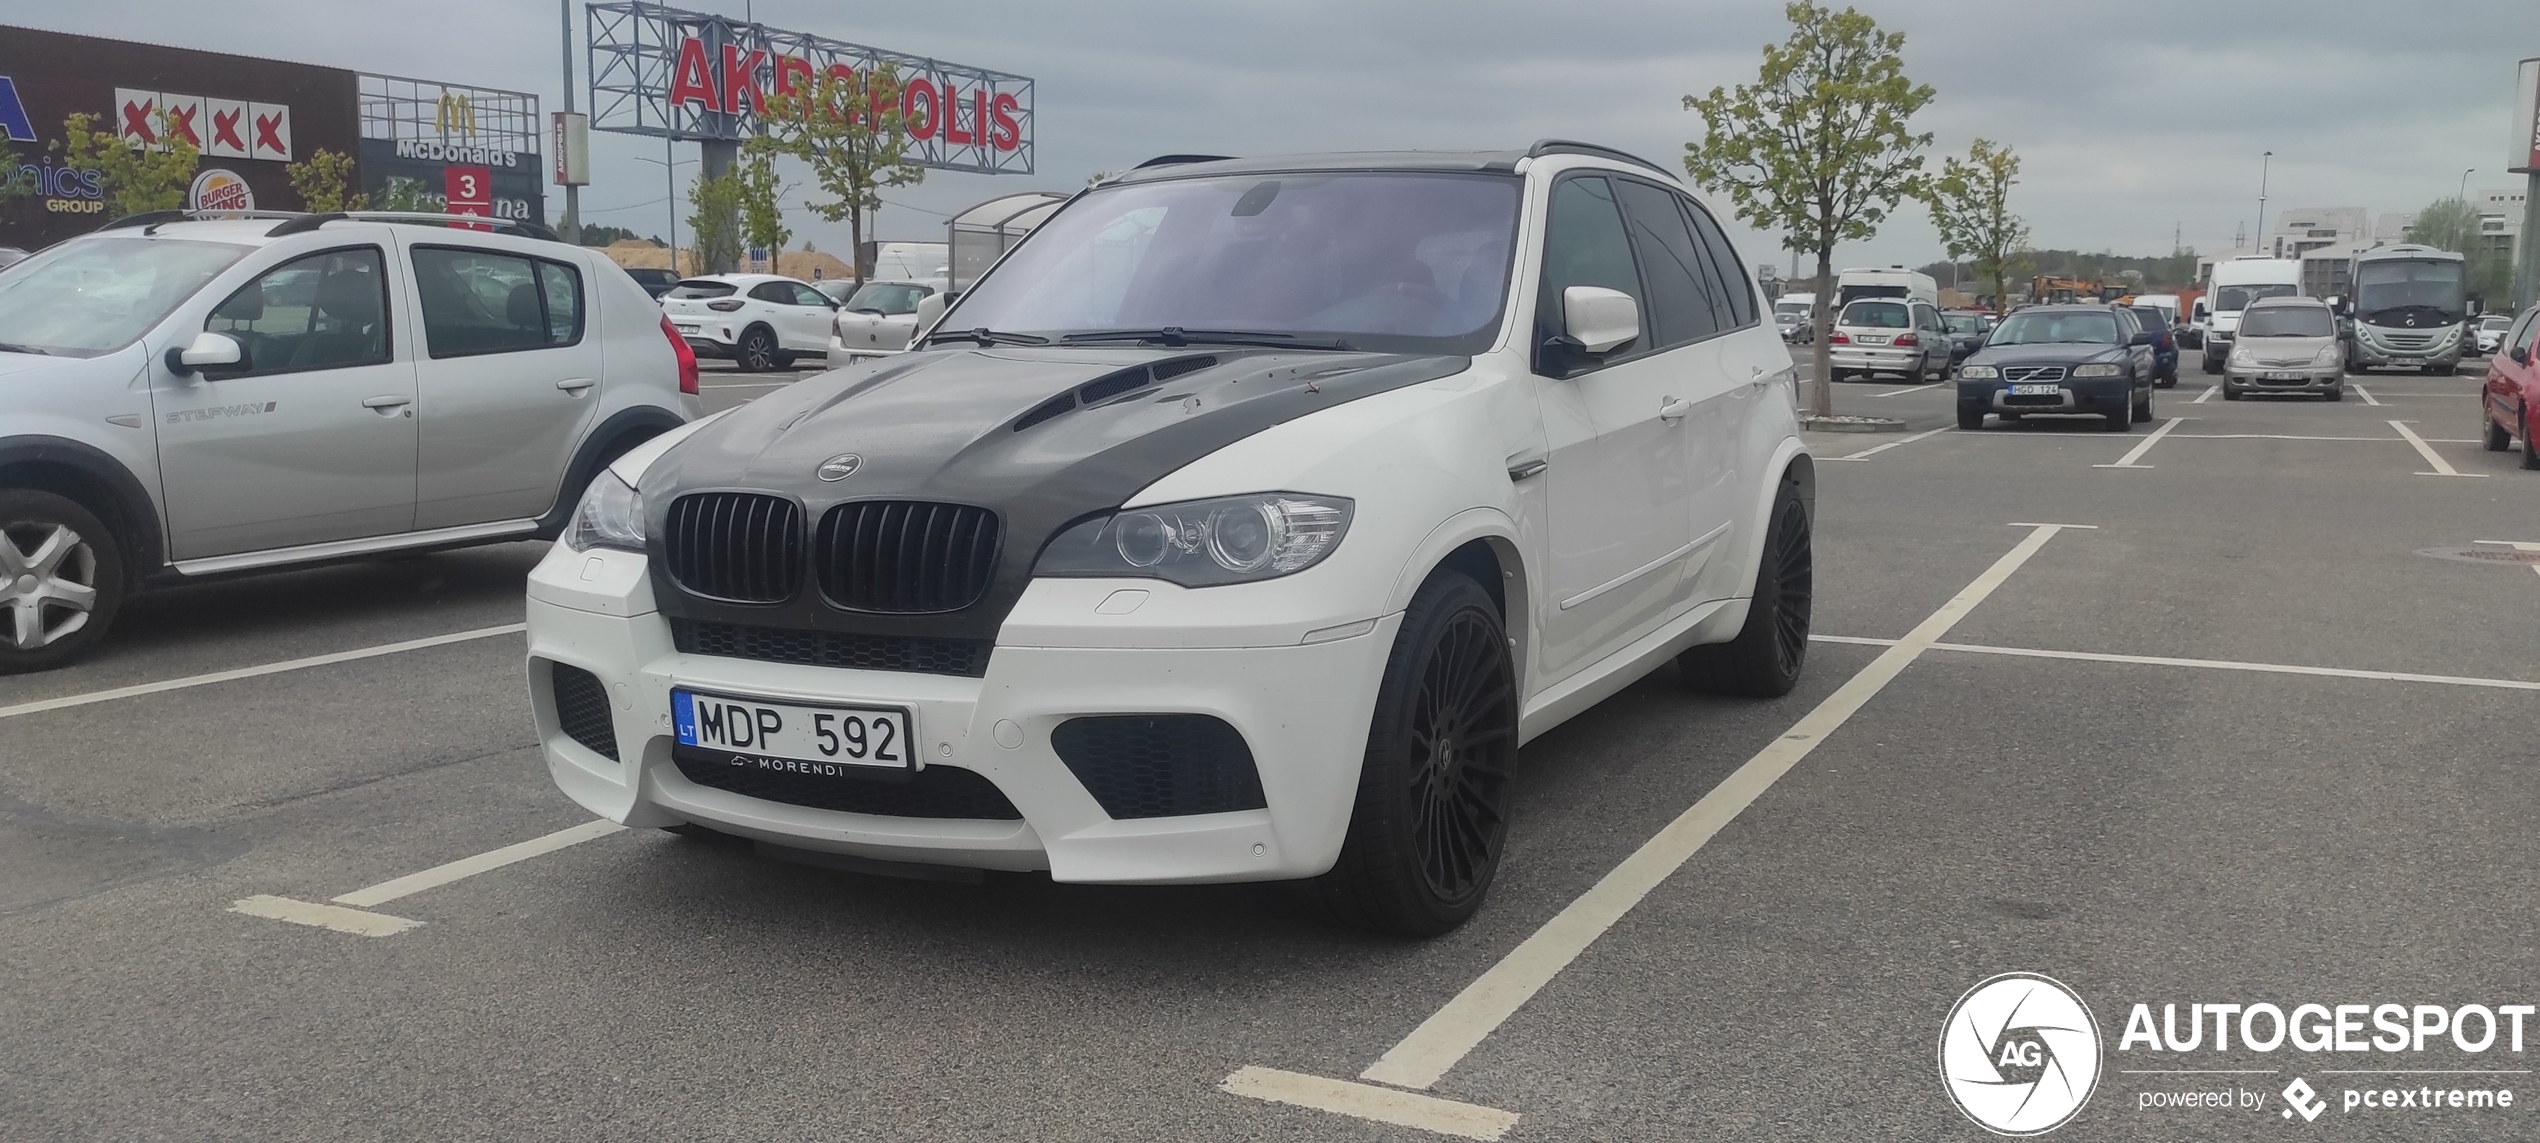 BMW X5 M E70 - 14-05-2022 18:40 - Autogespot